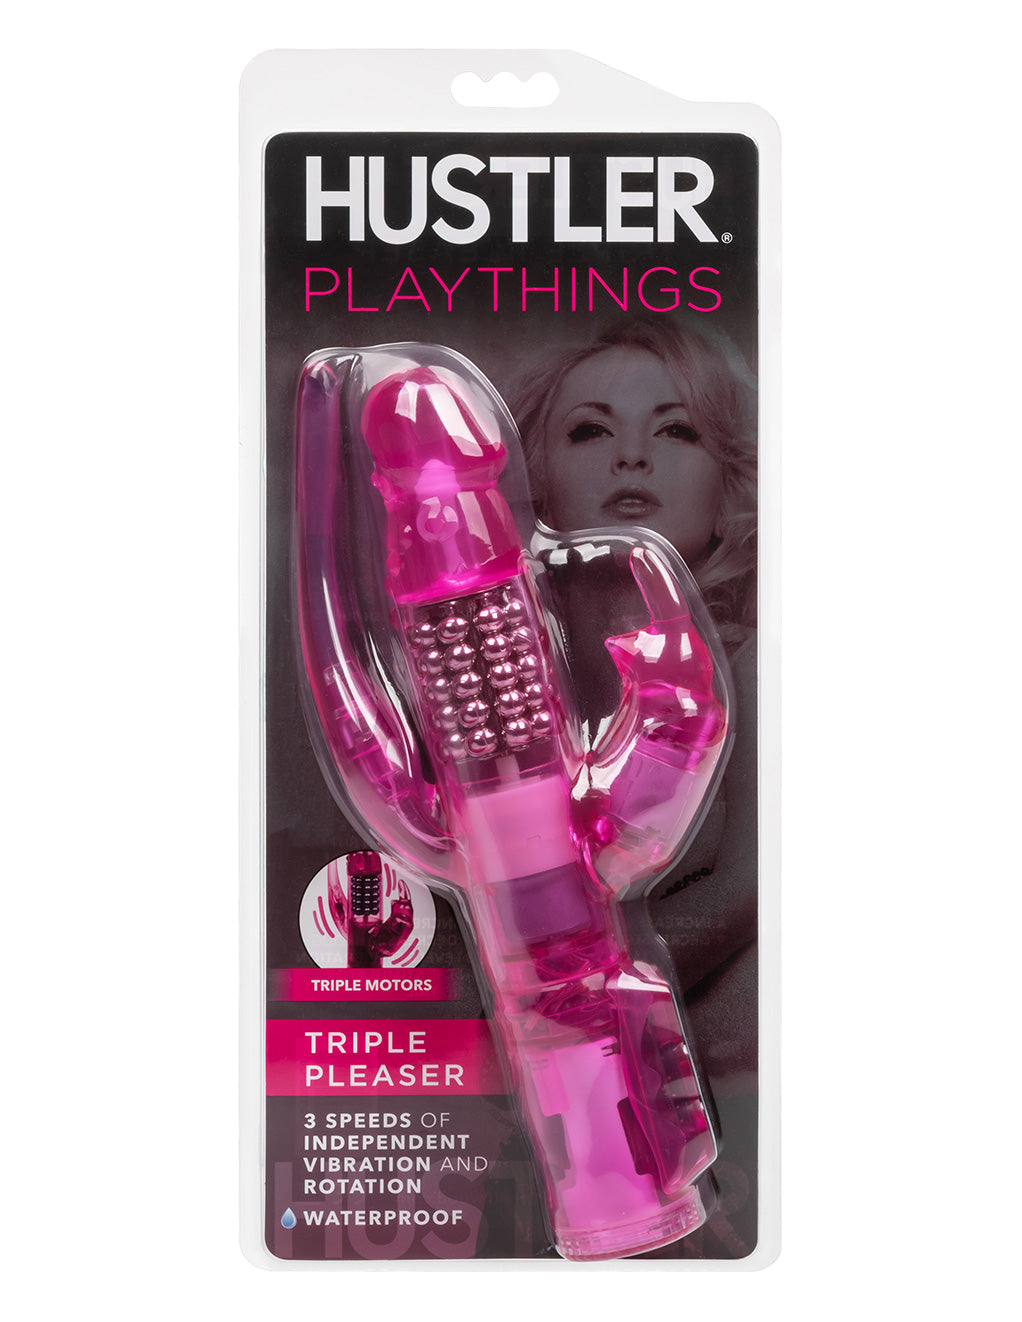 Hustler® Playthings Triple Pleaser Vibrator- Front package